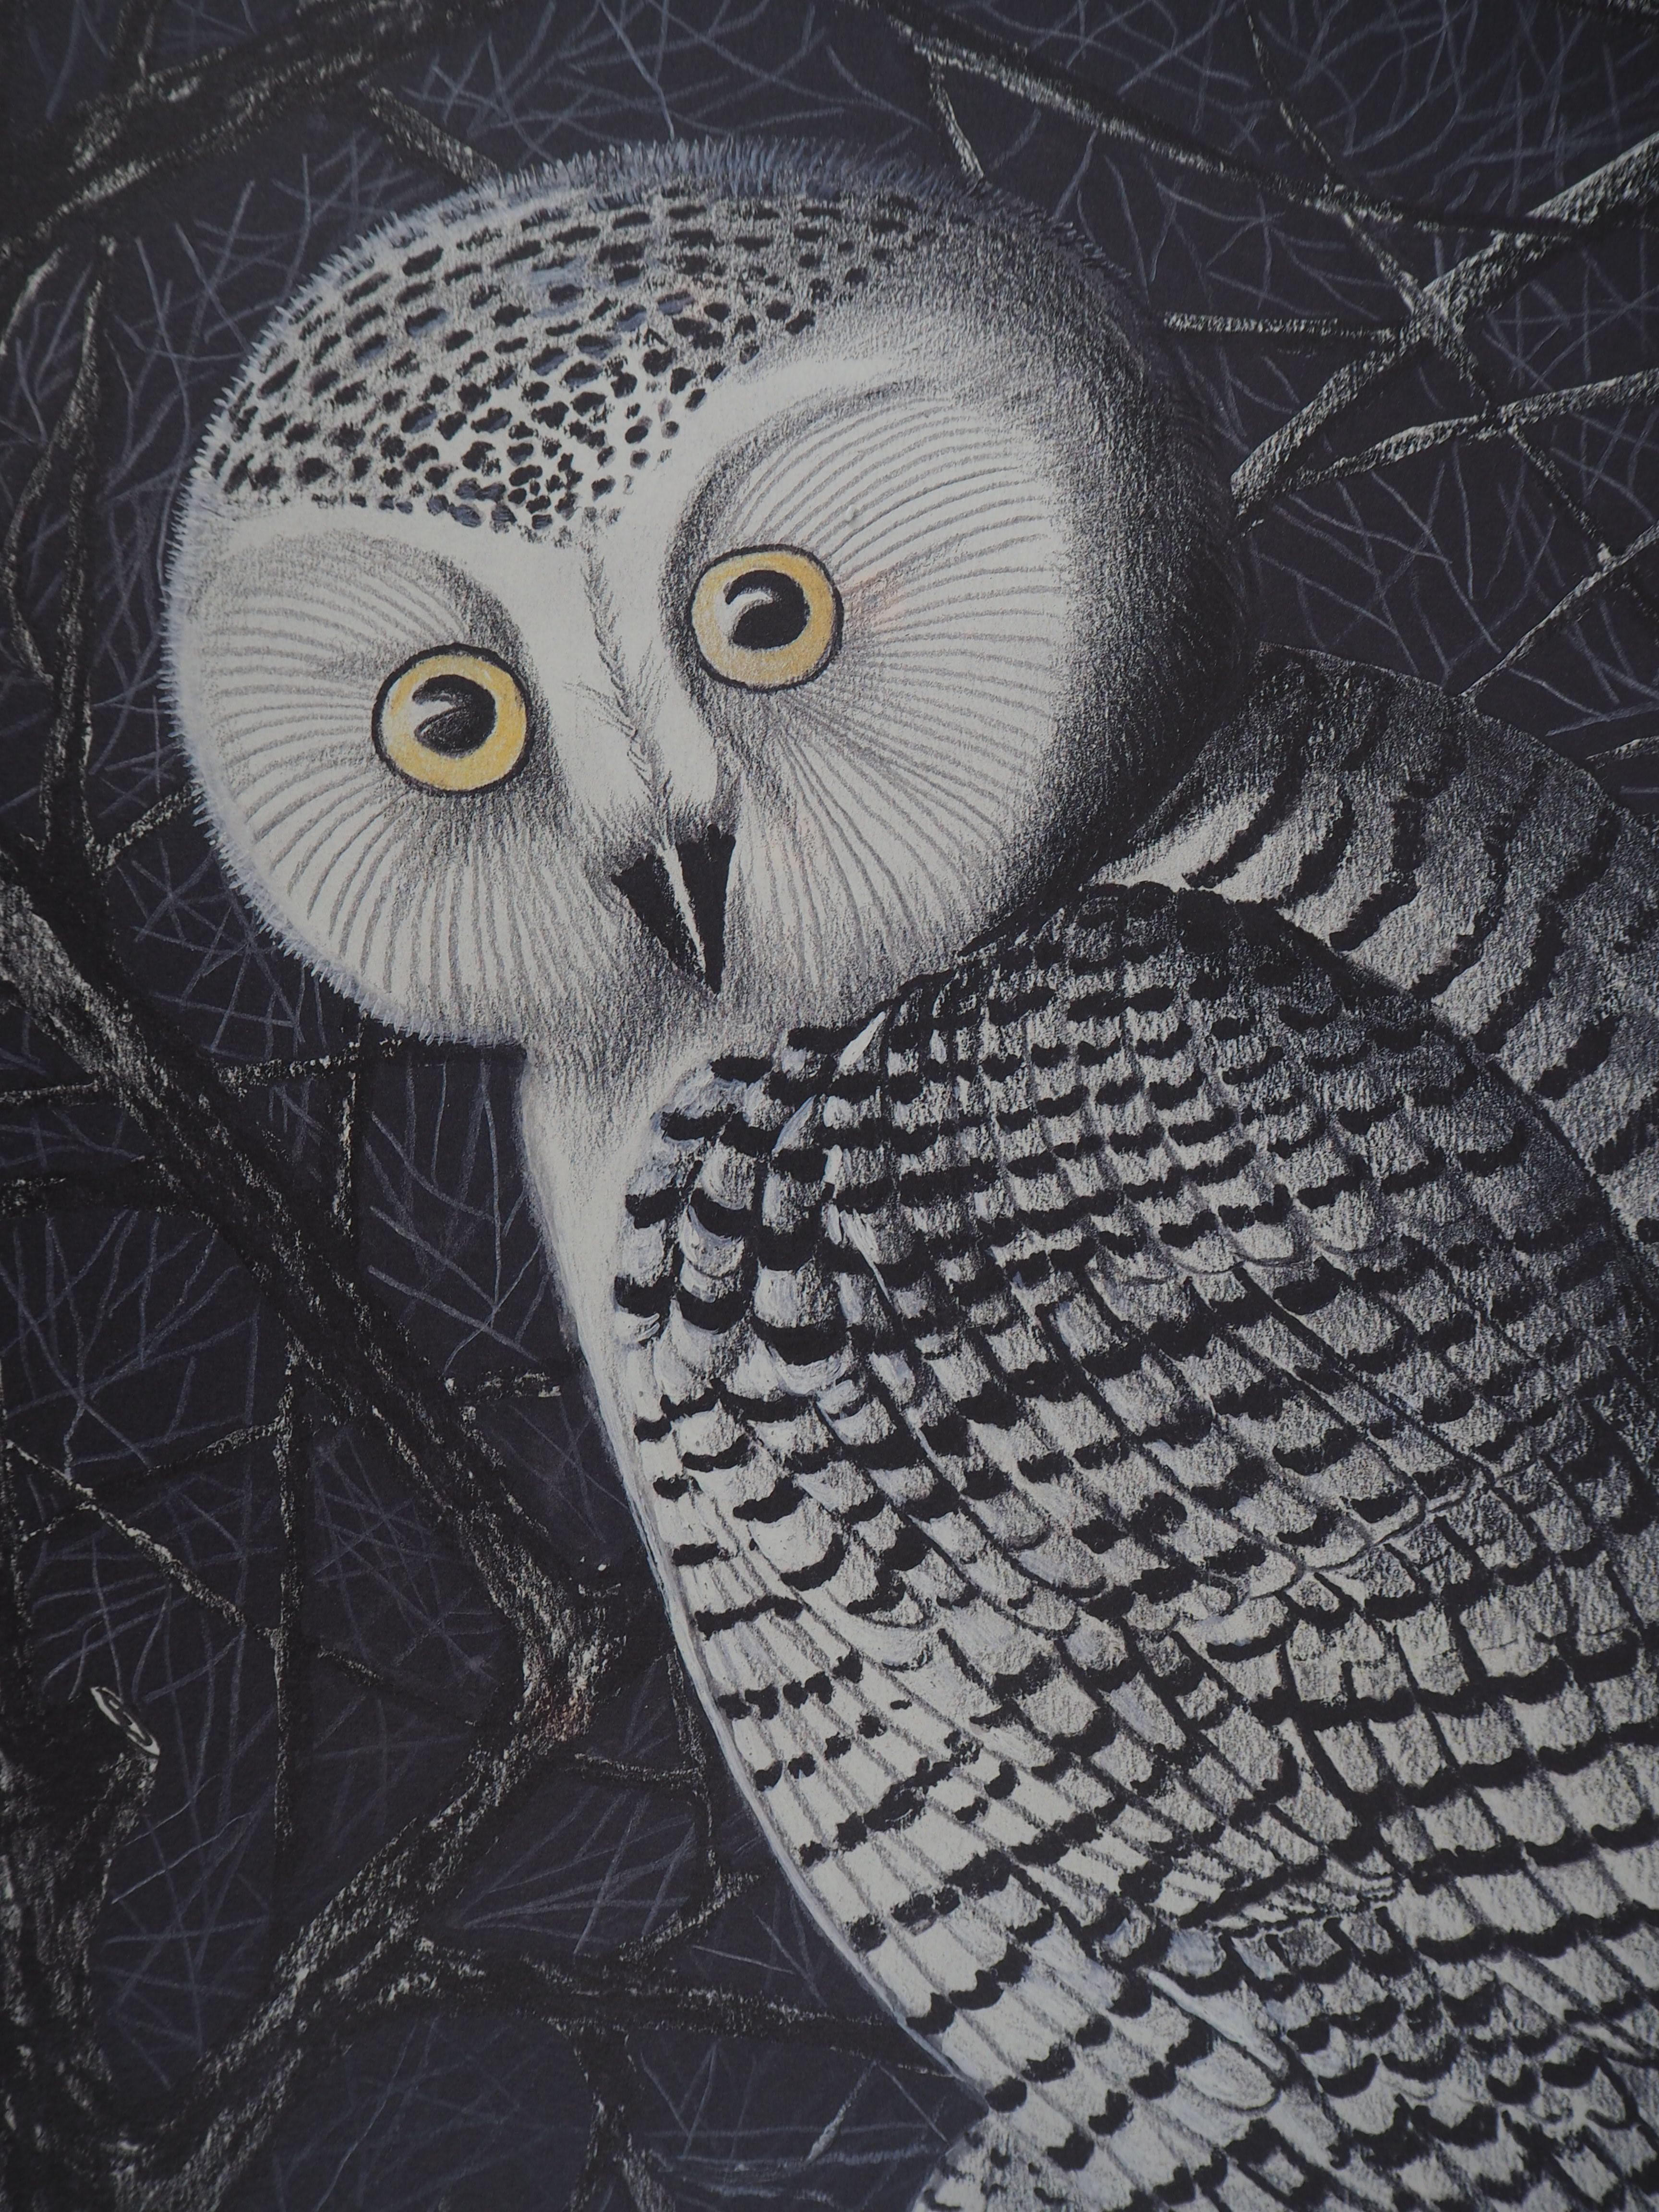 The Owl - Lithograph, Ltd 50 copies - Gray Animal Print by Jean Marais